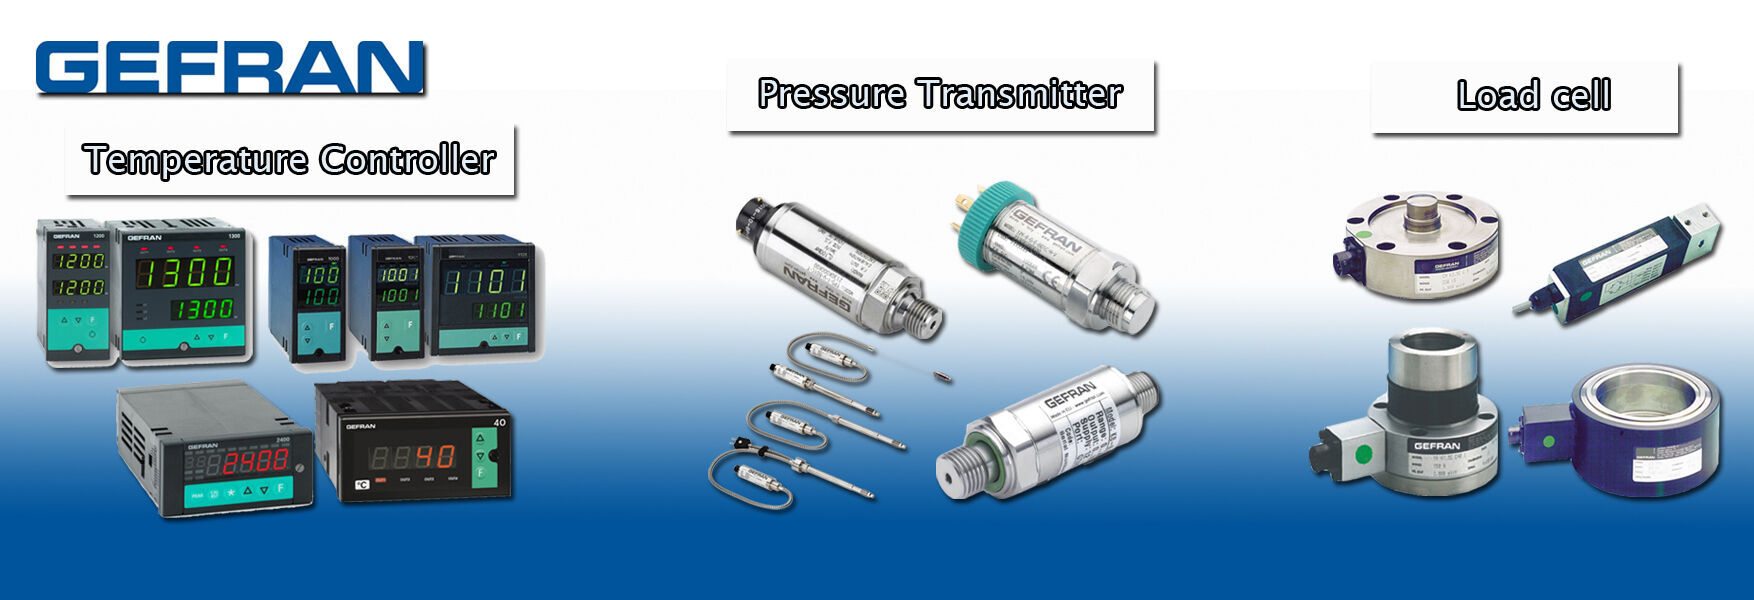 GEFRAN,Temp,Pressure Transmiter,Load Cell